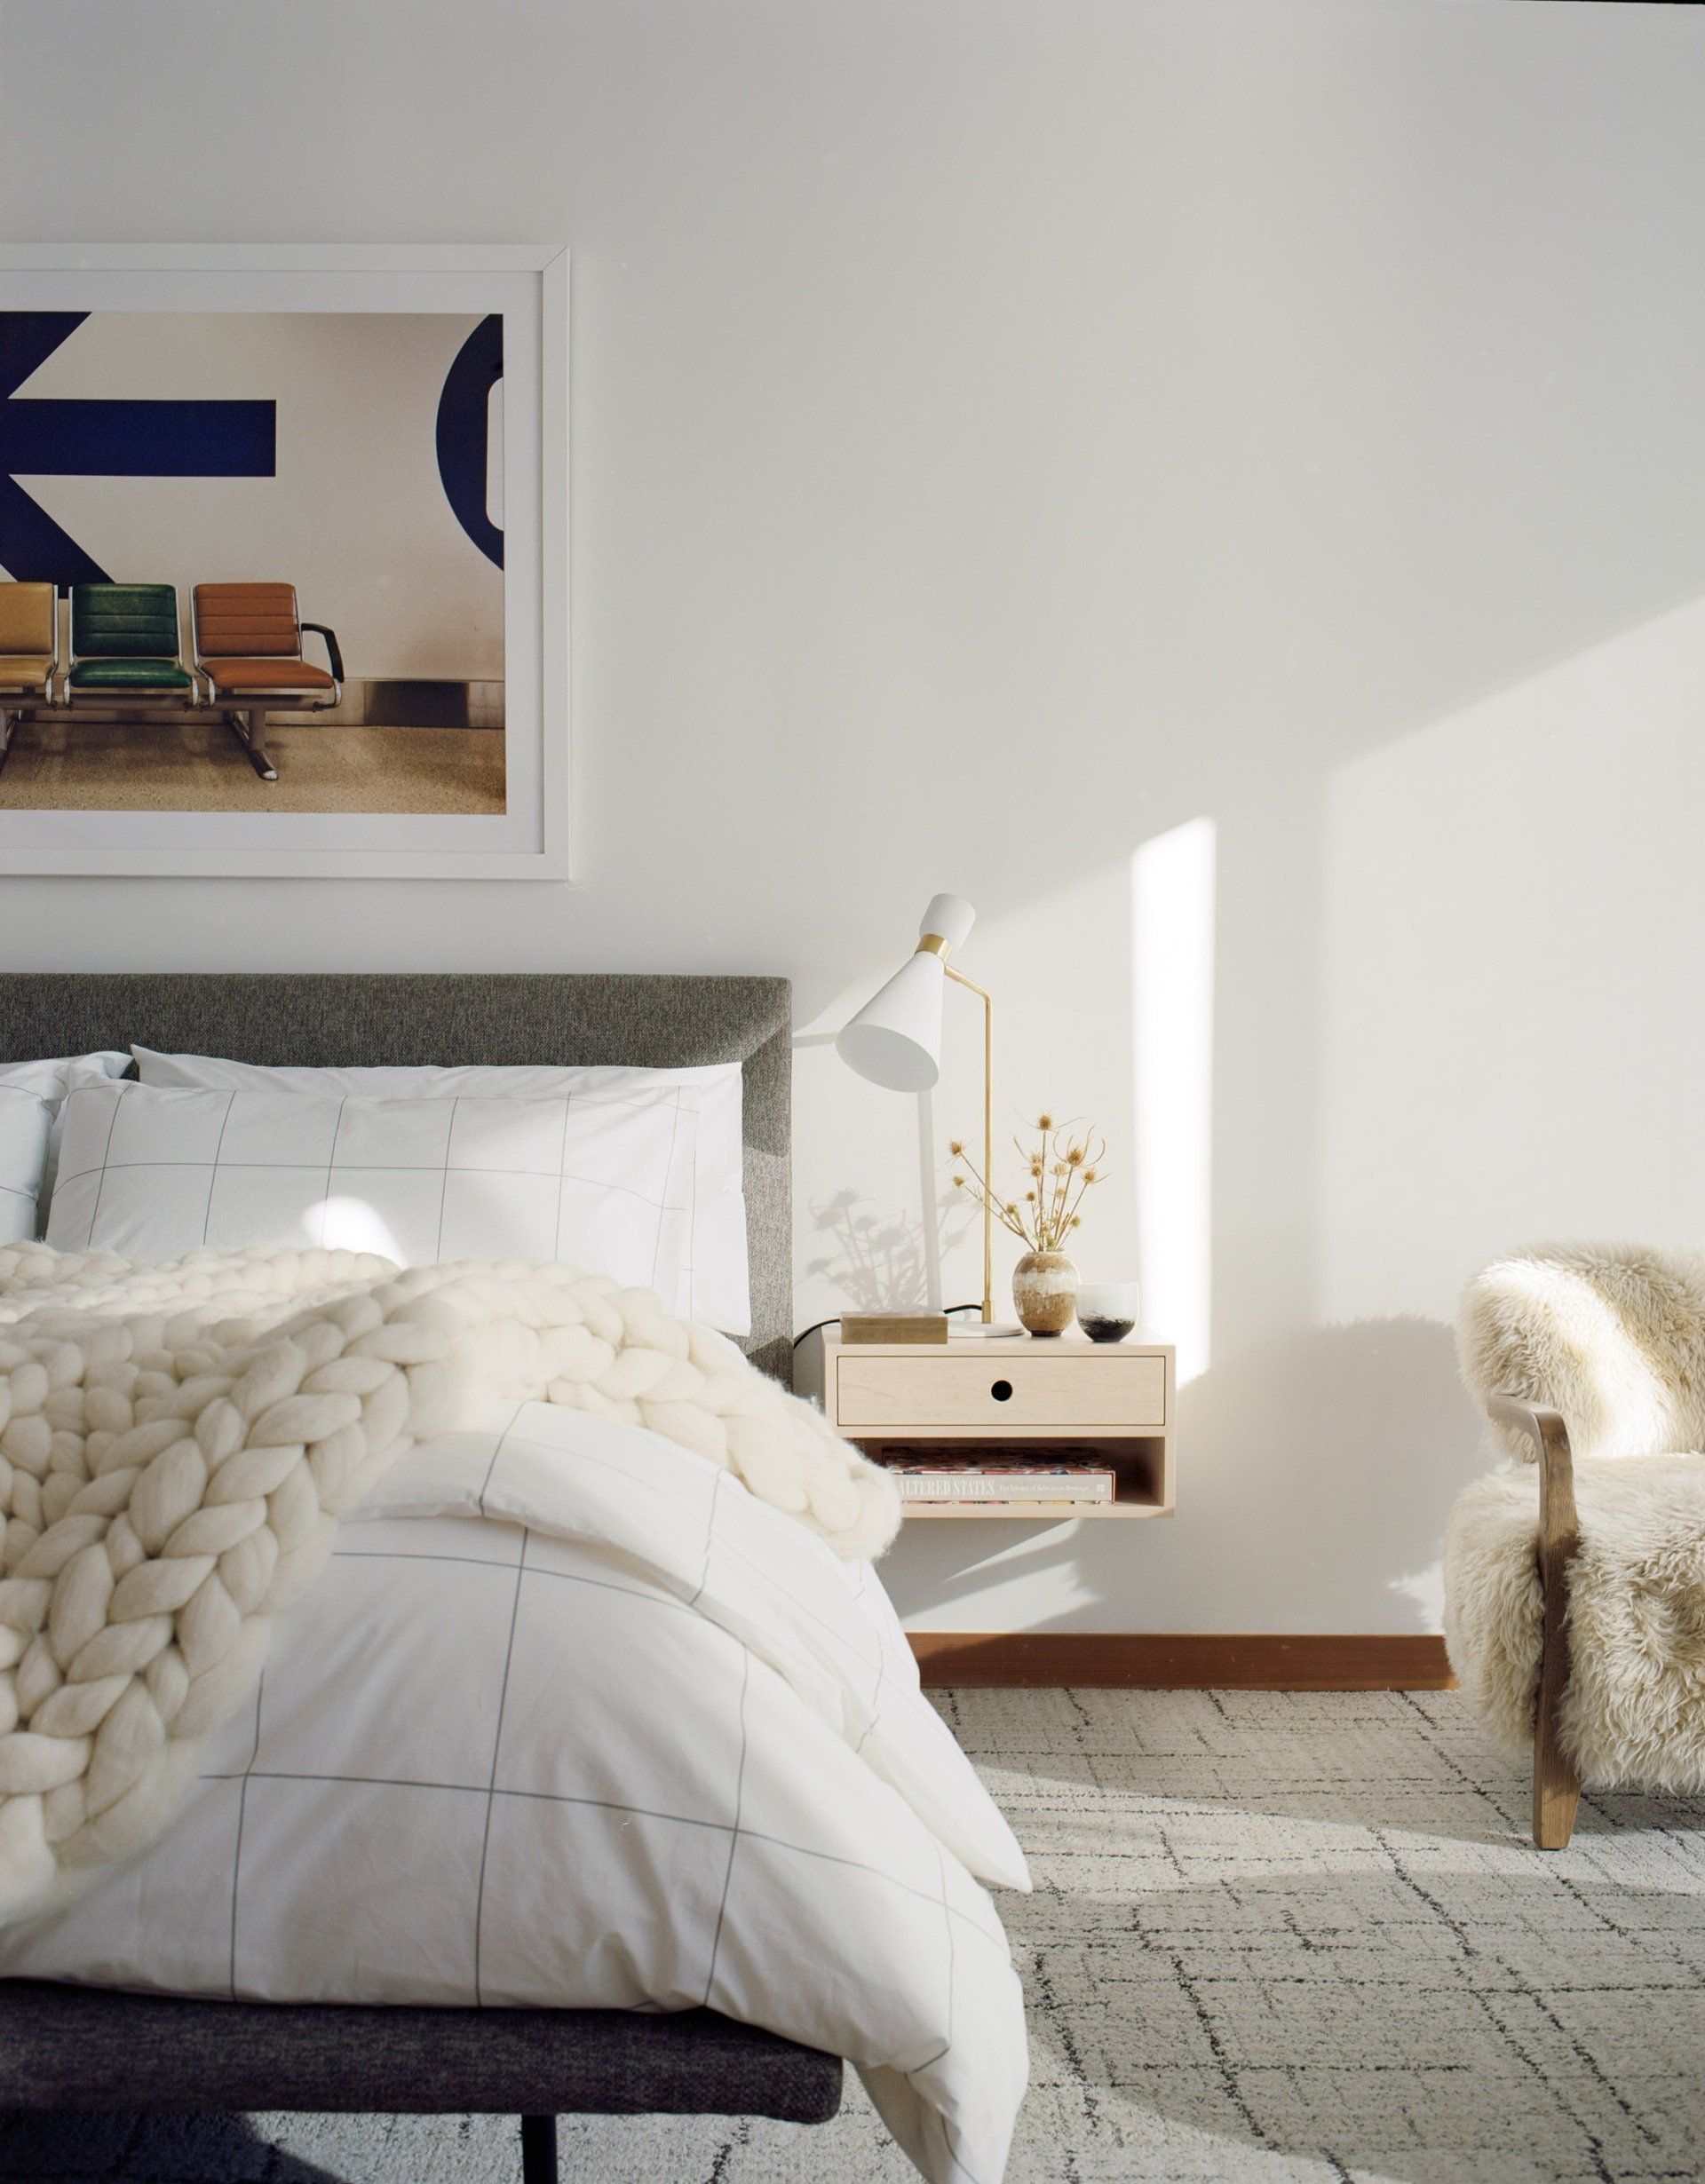 Bedroom in a Home in Northern California designed by Dakota DesignWorks